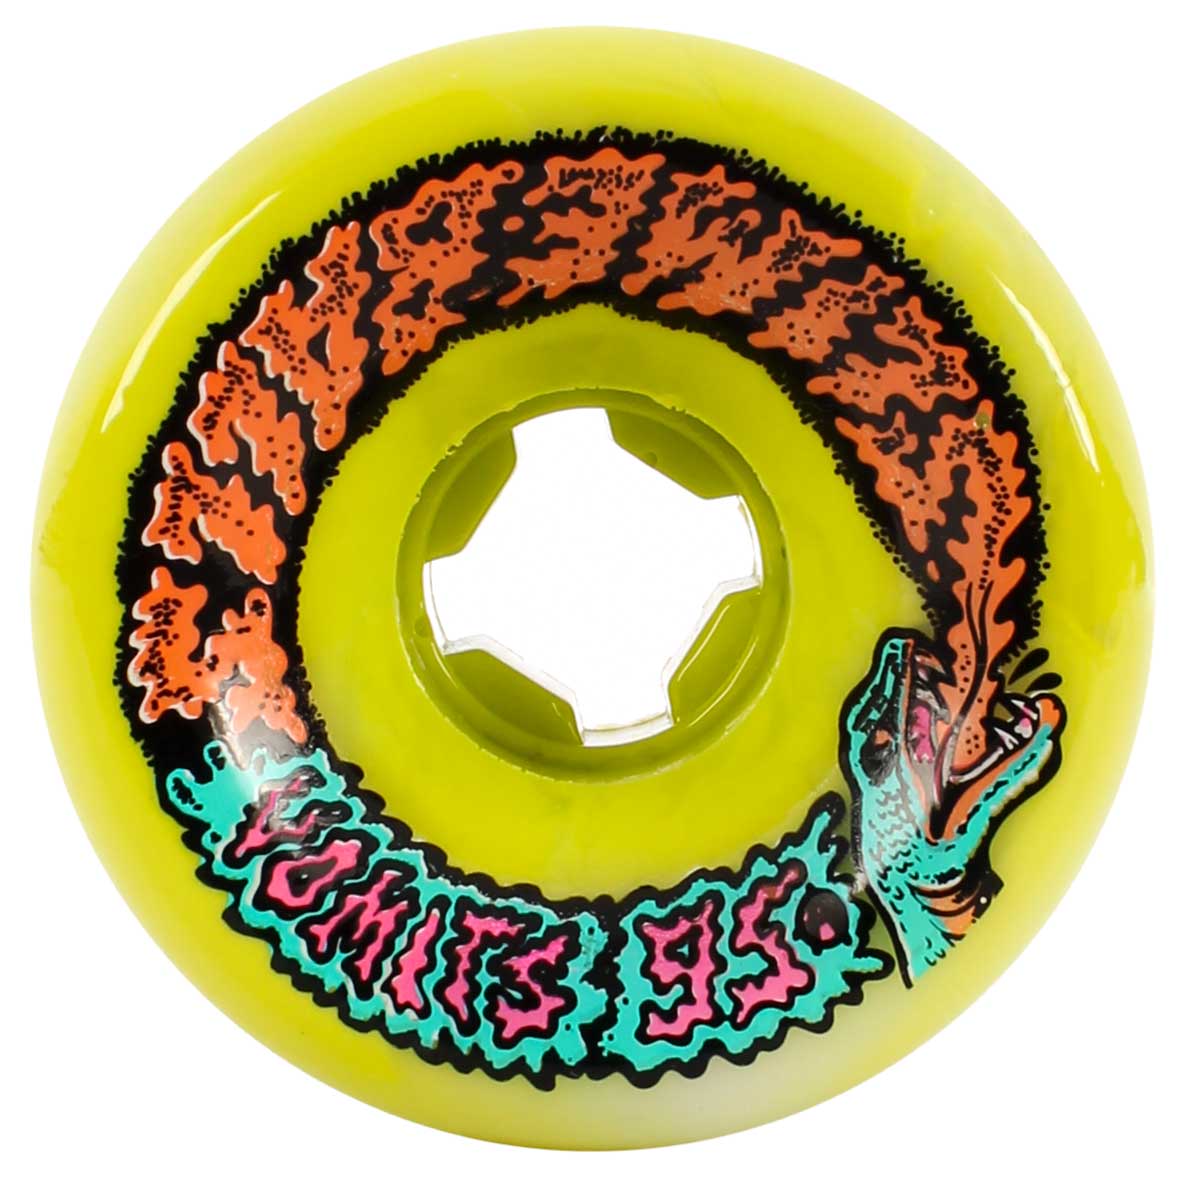 60mm 95a Slime Balls Snake Vomits Wheels - Green/White Swirl